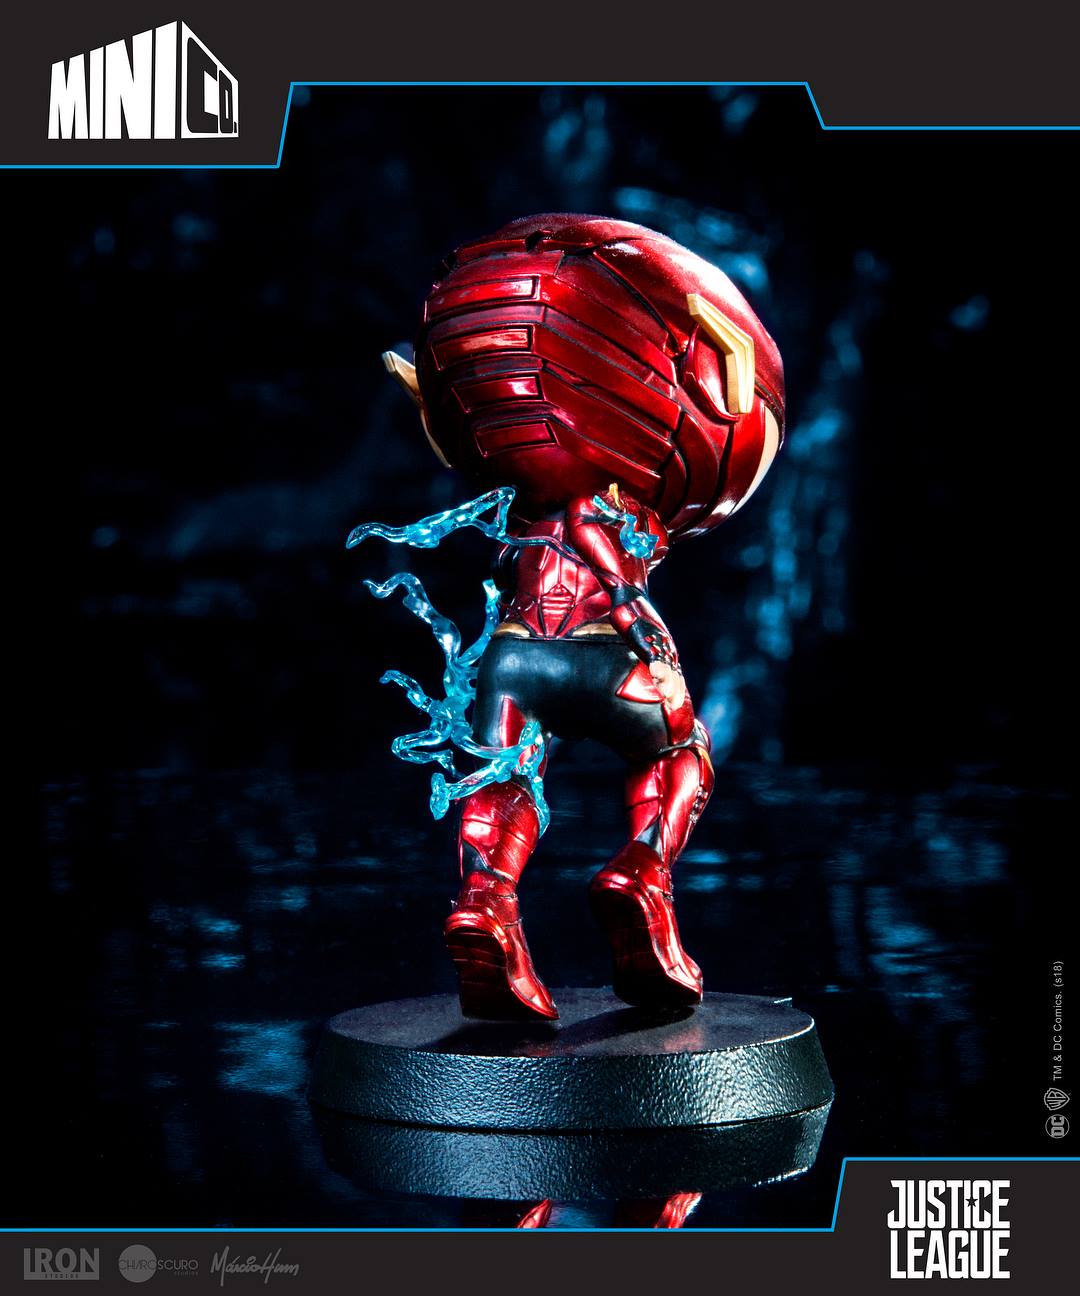 Iron Studios - Mini Co. Heroes - Justice League - The Flash